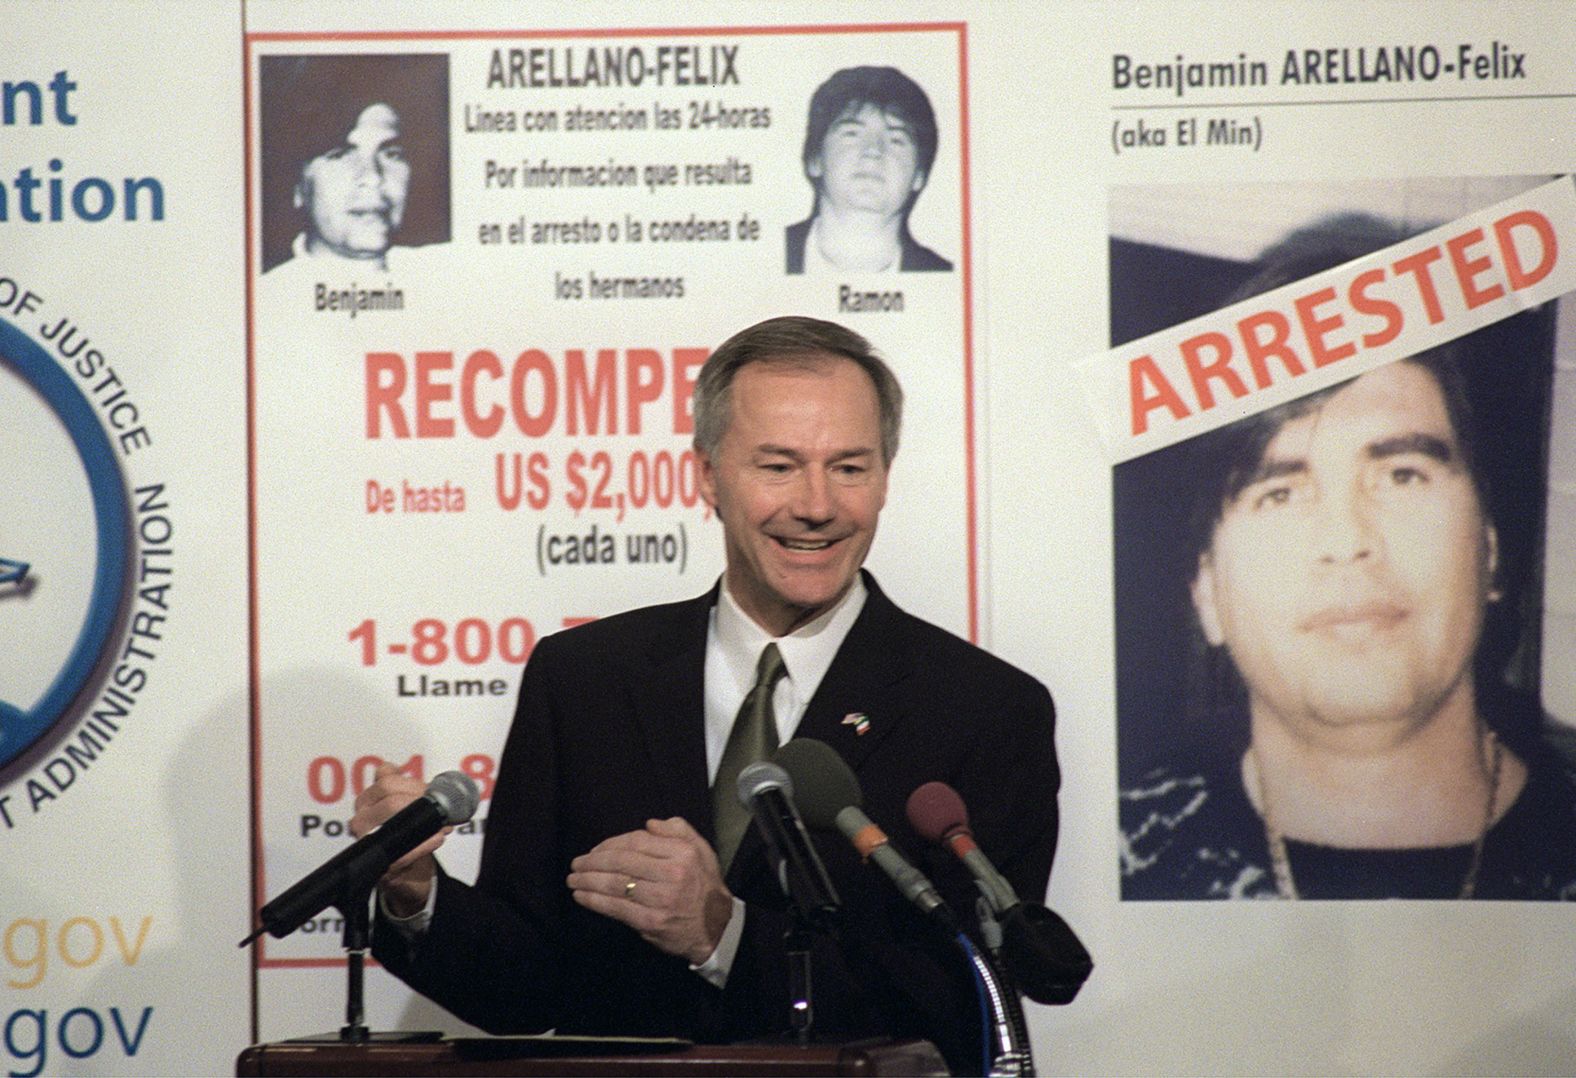 Hutchinson explains the arrest of Mexican drug trafficker Benjamin Arellano Felix in March 2002.